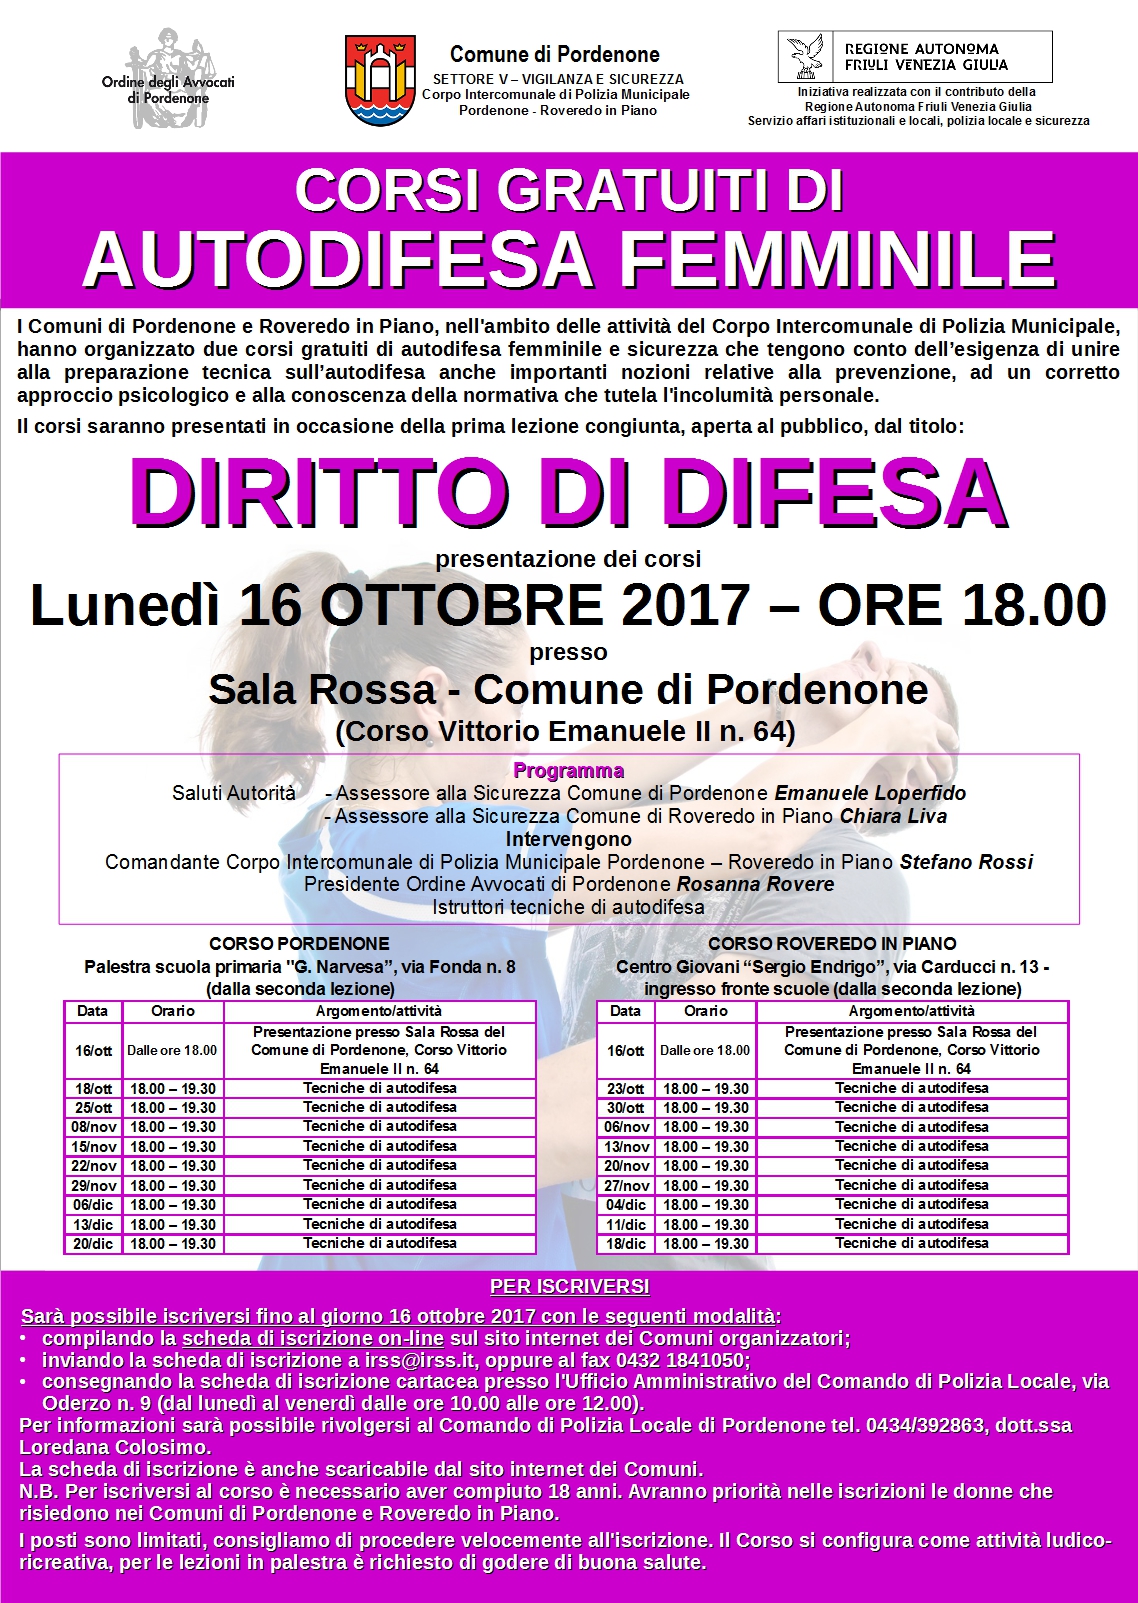 Locandina-Corso-Autodifesa-Pordenone A3+2017 v.2.jpg